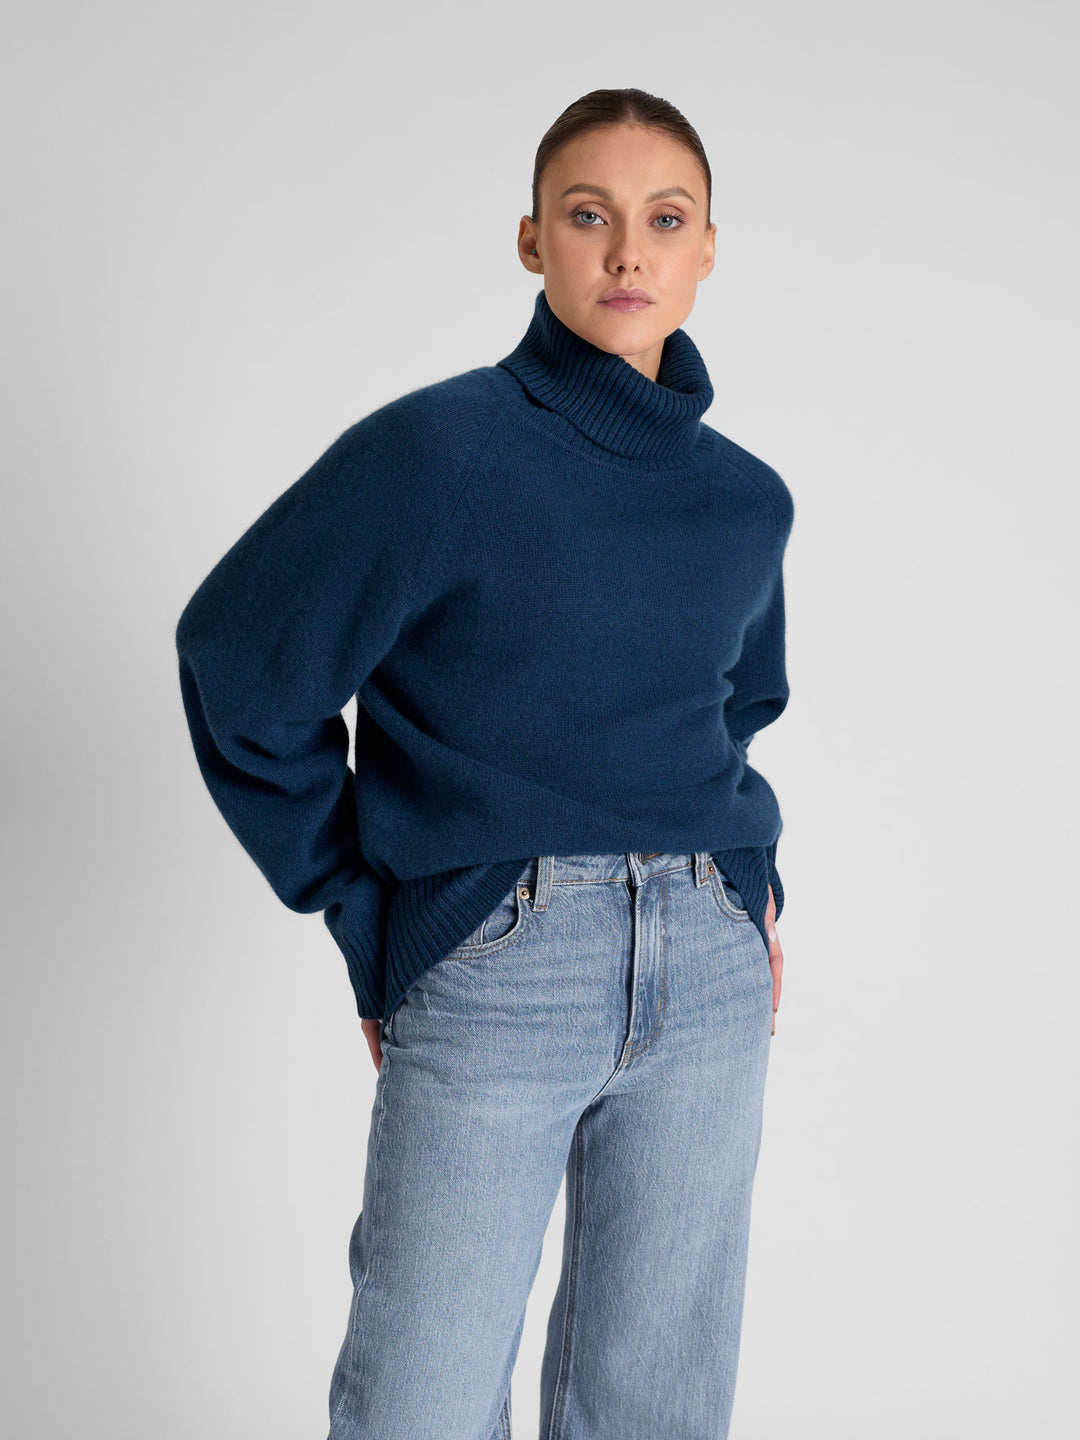 Turtle neck cashmere sweater "Milano" in 100% pure cashmere. Scandinavian design by Kashmina. Color: Mountain Blue.